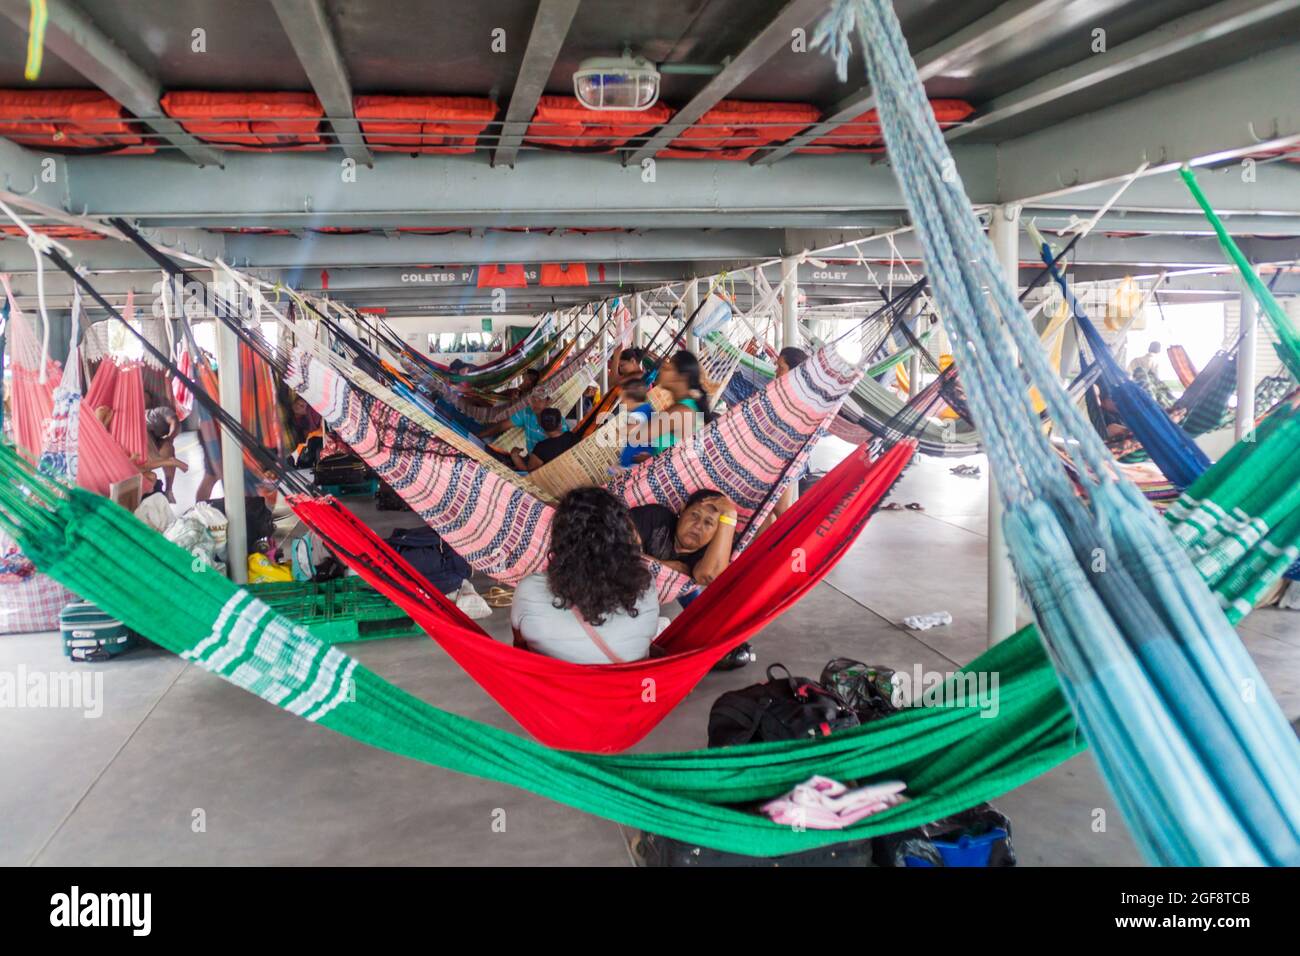 TABATINGA, BRAZIL - JUNE 22, 2015: Passengers of hammock deck at the boat Diamante which plies river Amazon between Tabatinga and Manaus, Brazil. Stock Photo